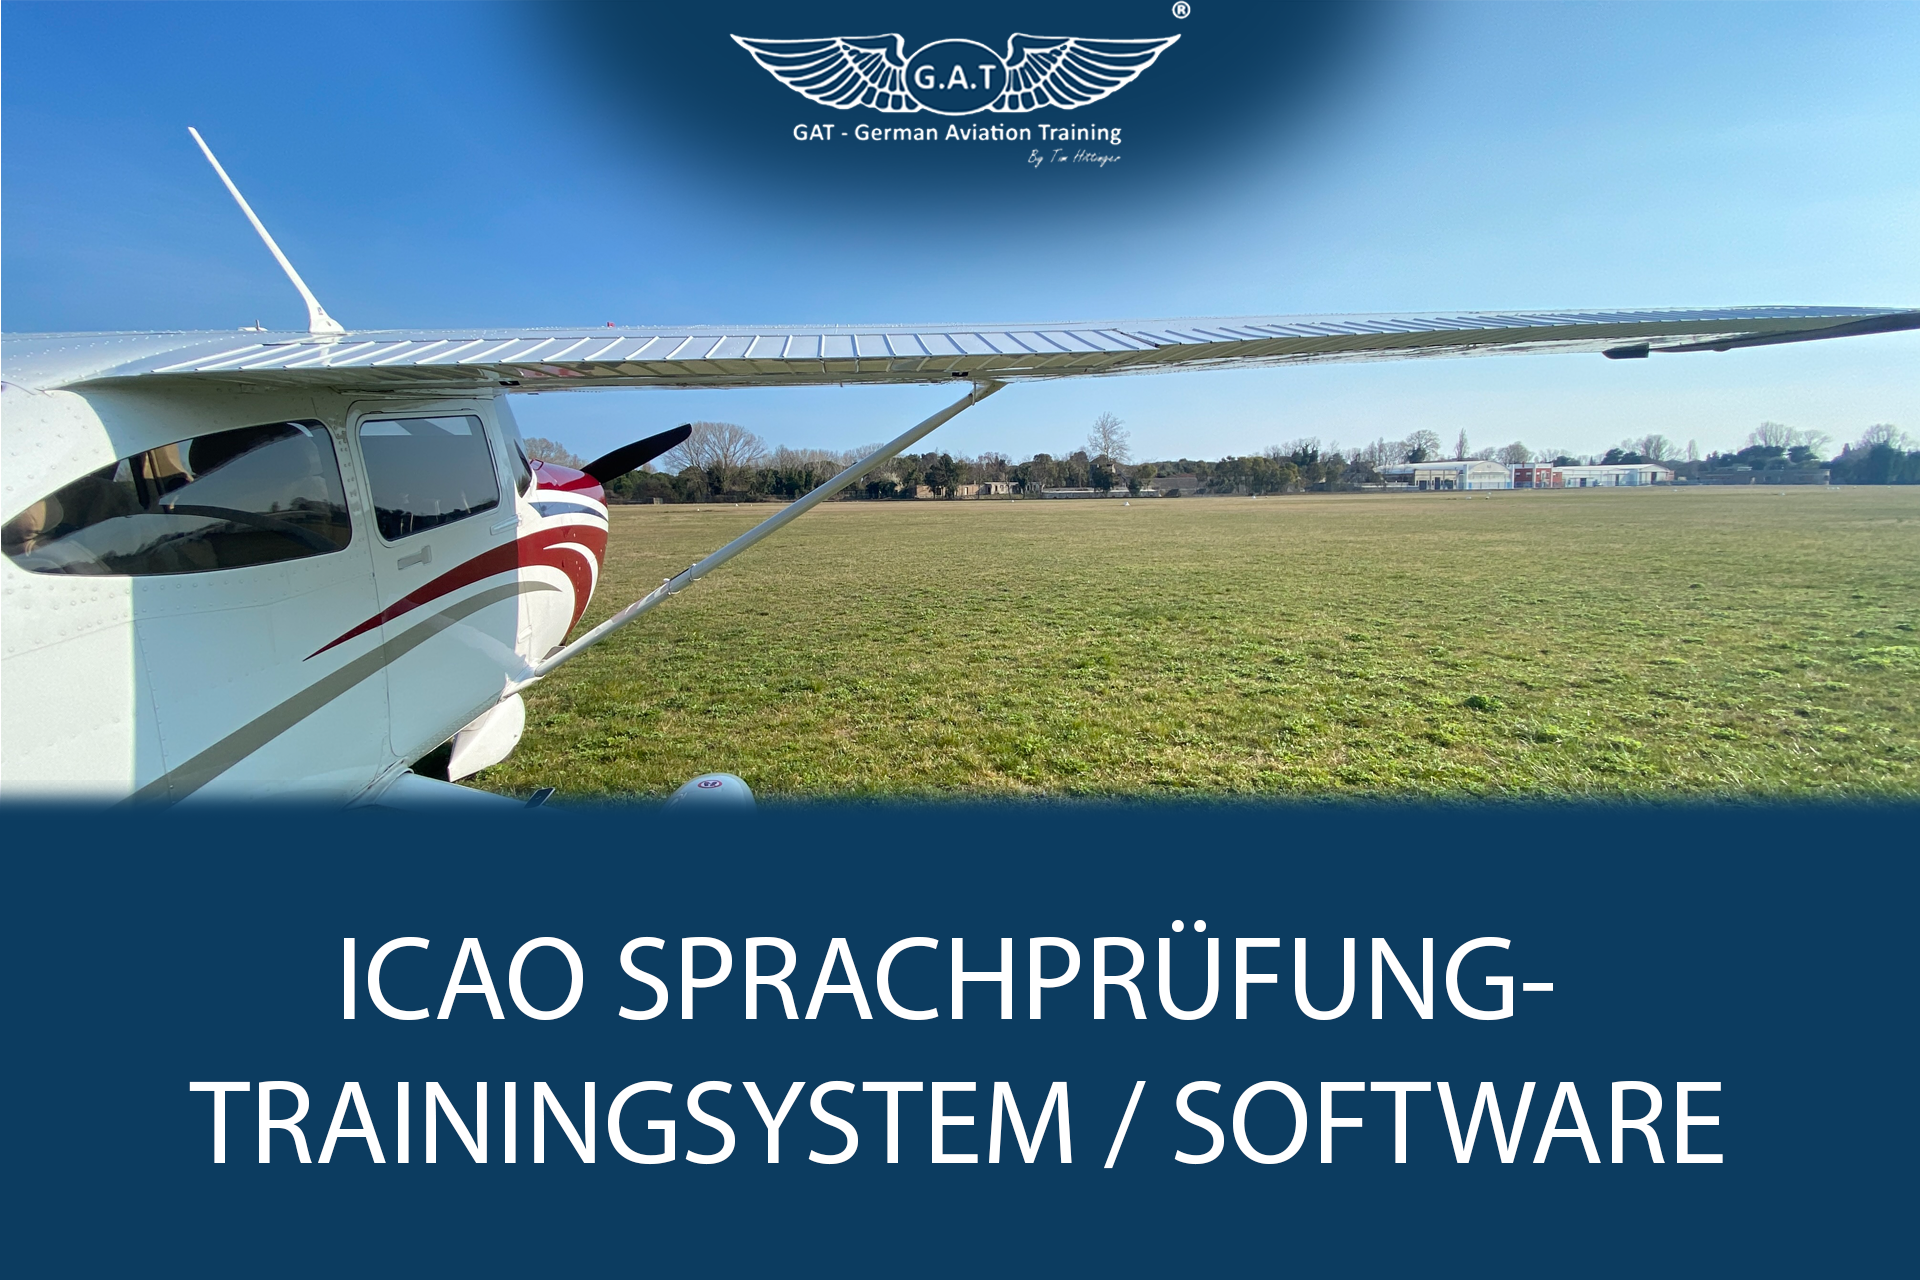 ICAO Sprachprüfung Training System